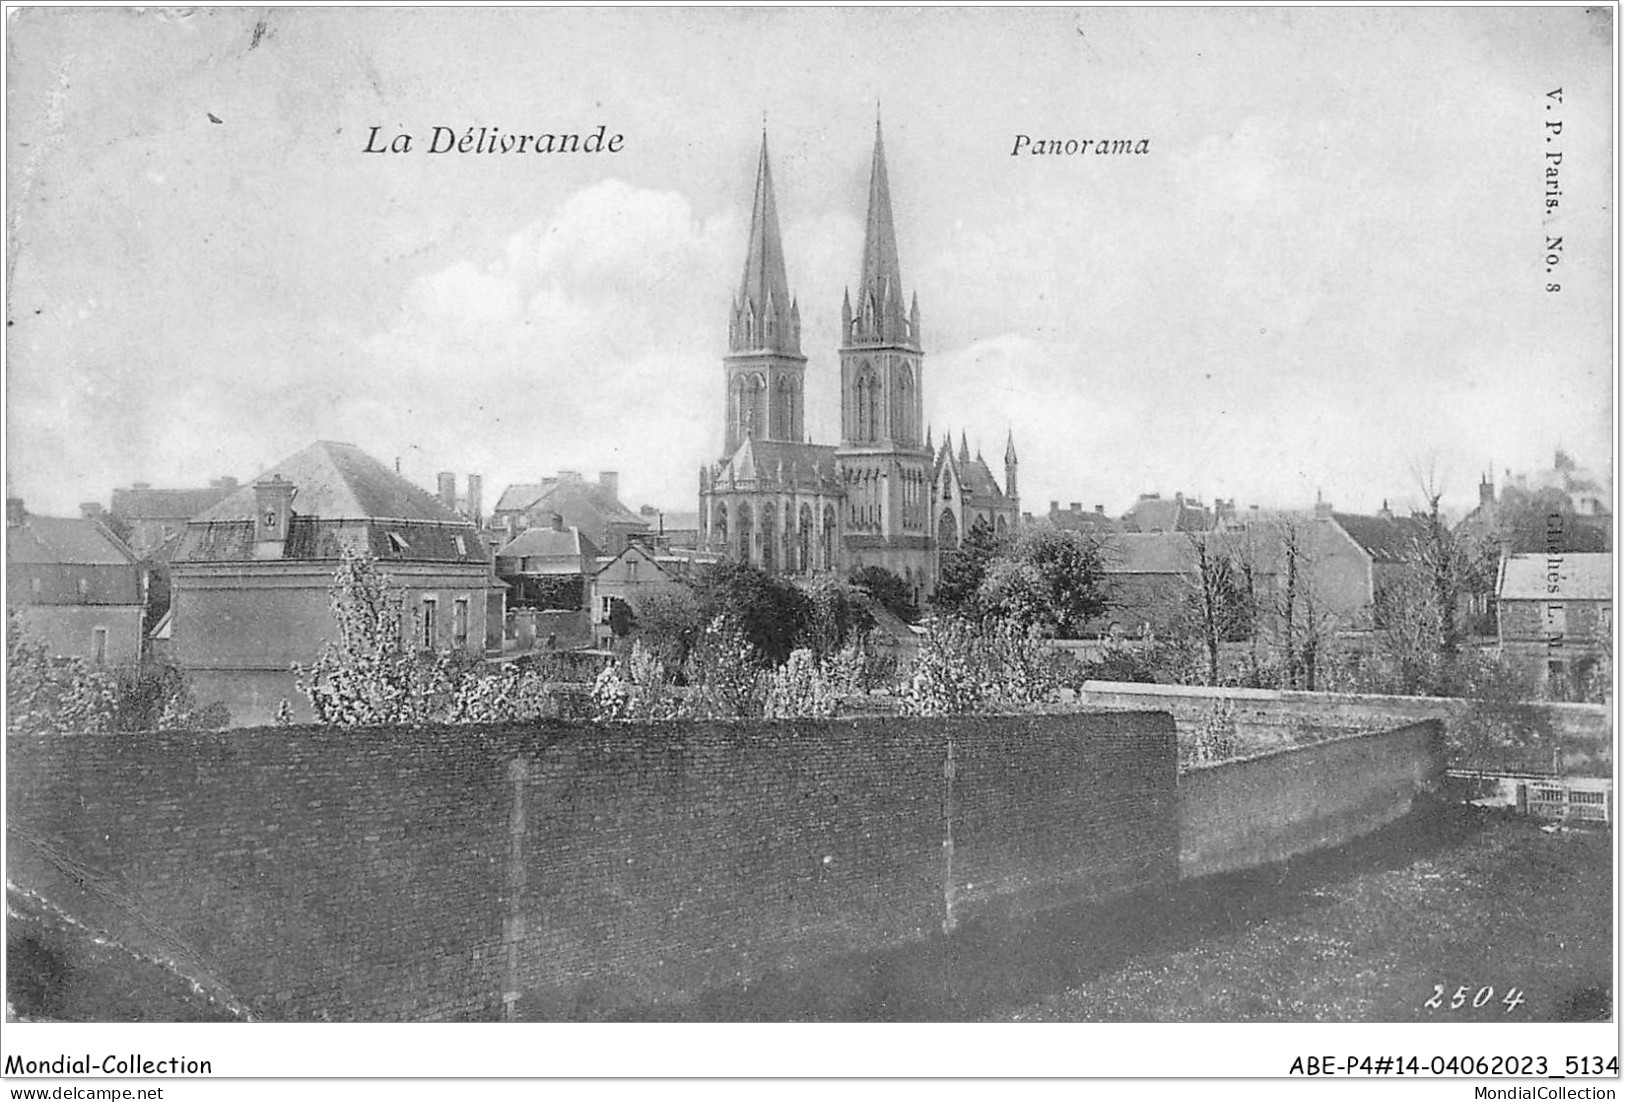 ABEP4-14-0286 - La Délevrande - Panorama - La Delivrande